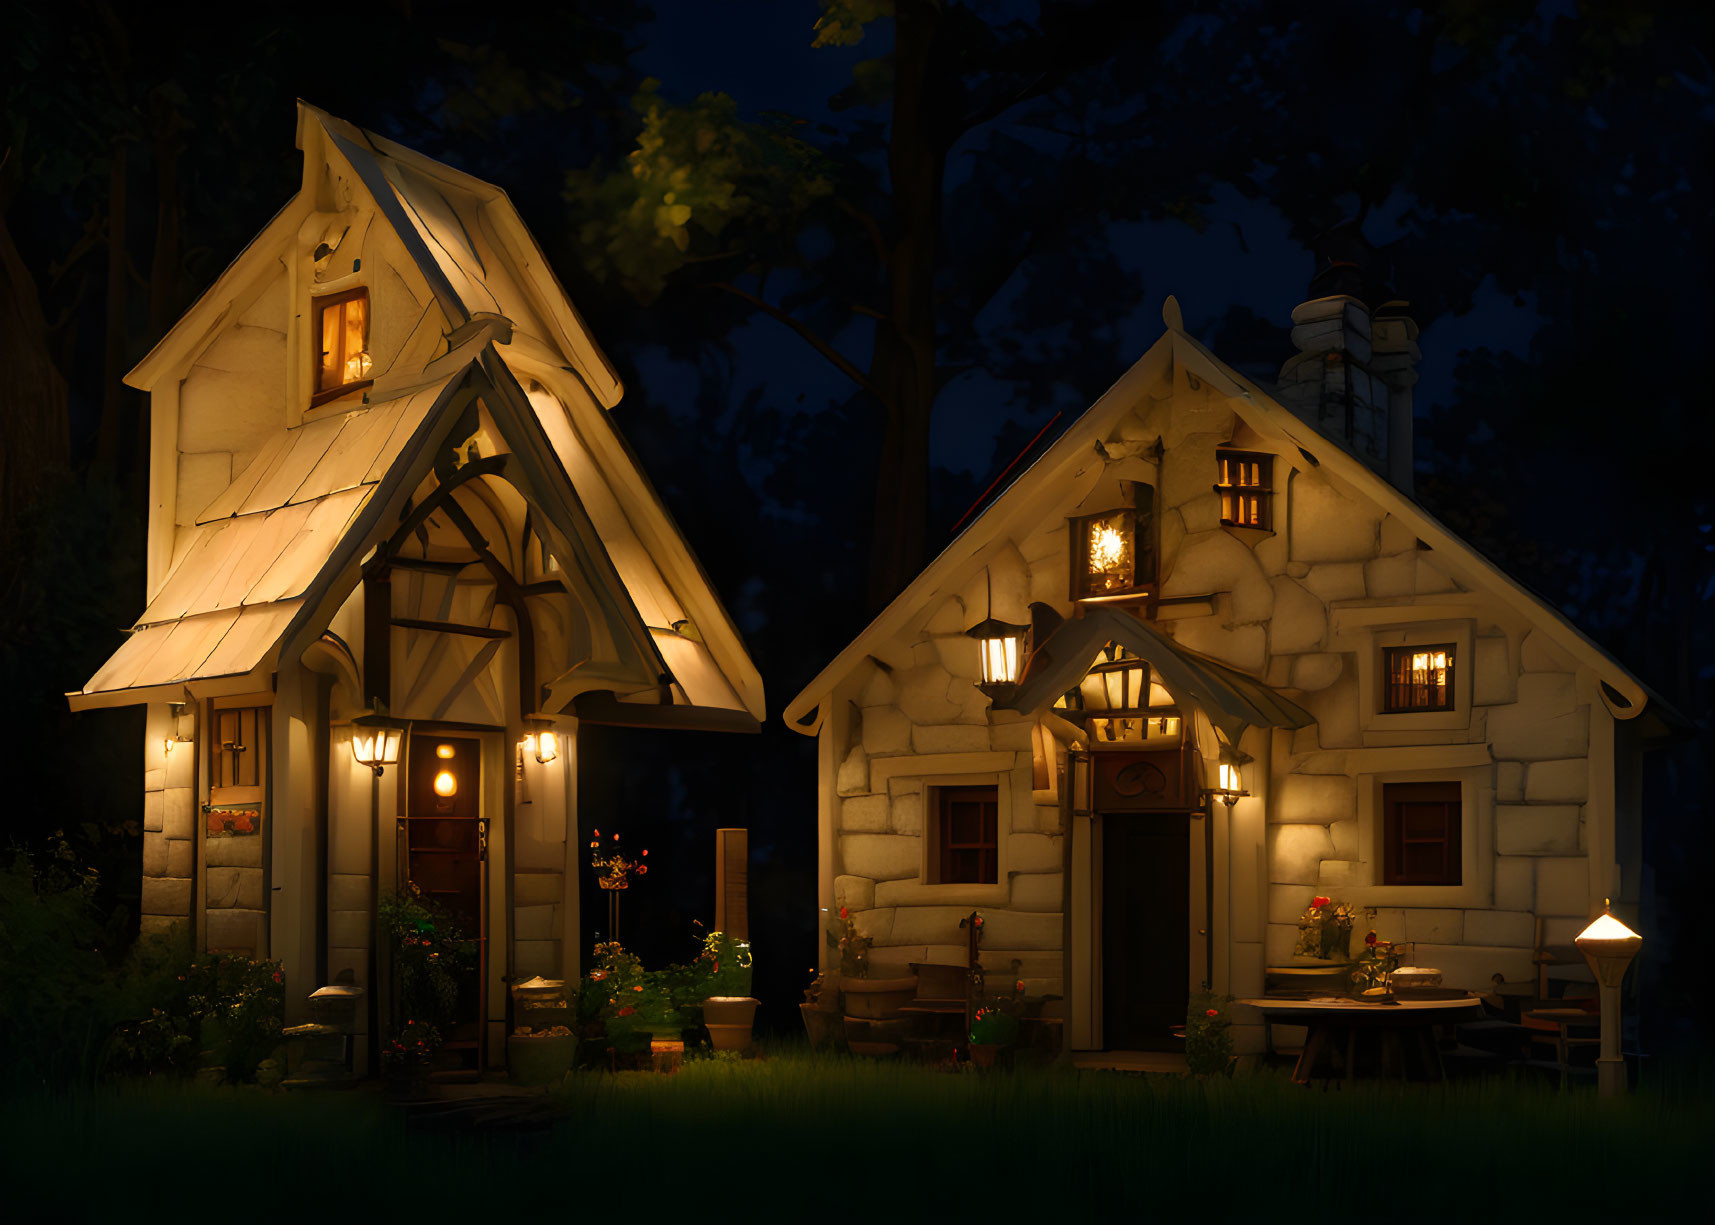 Cozy illuminated cottages in dark woods at night